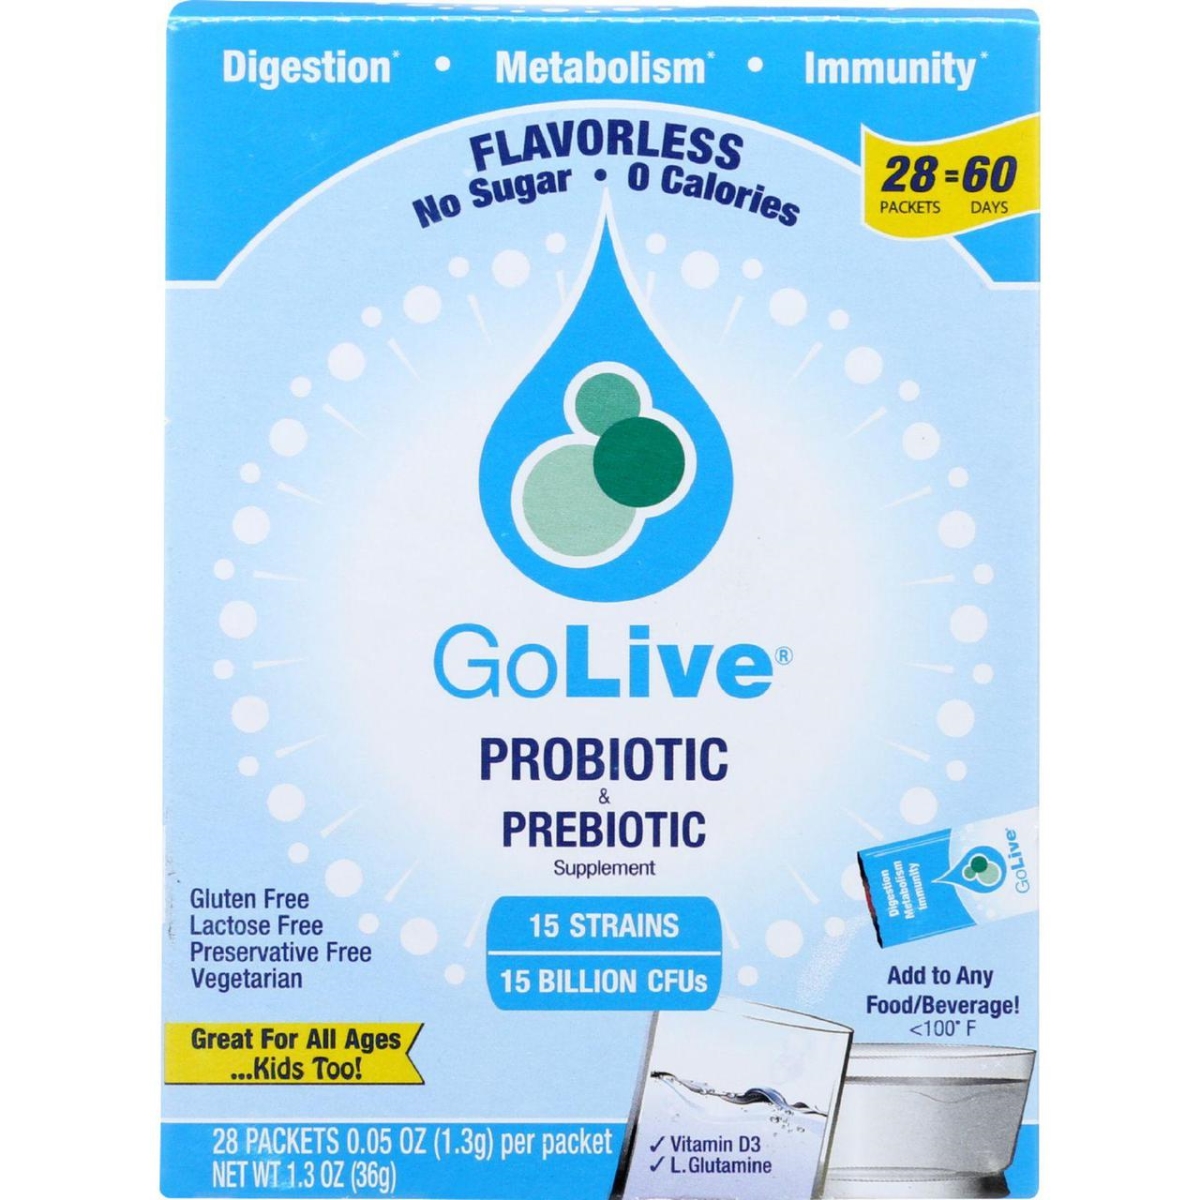 Hg1012509 Flavorless Probiotic & Prebiotic - 28 Packets